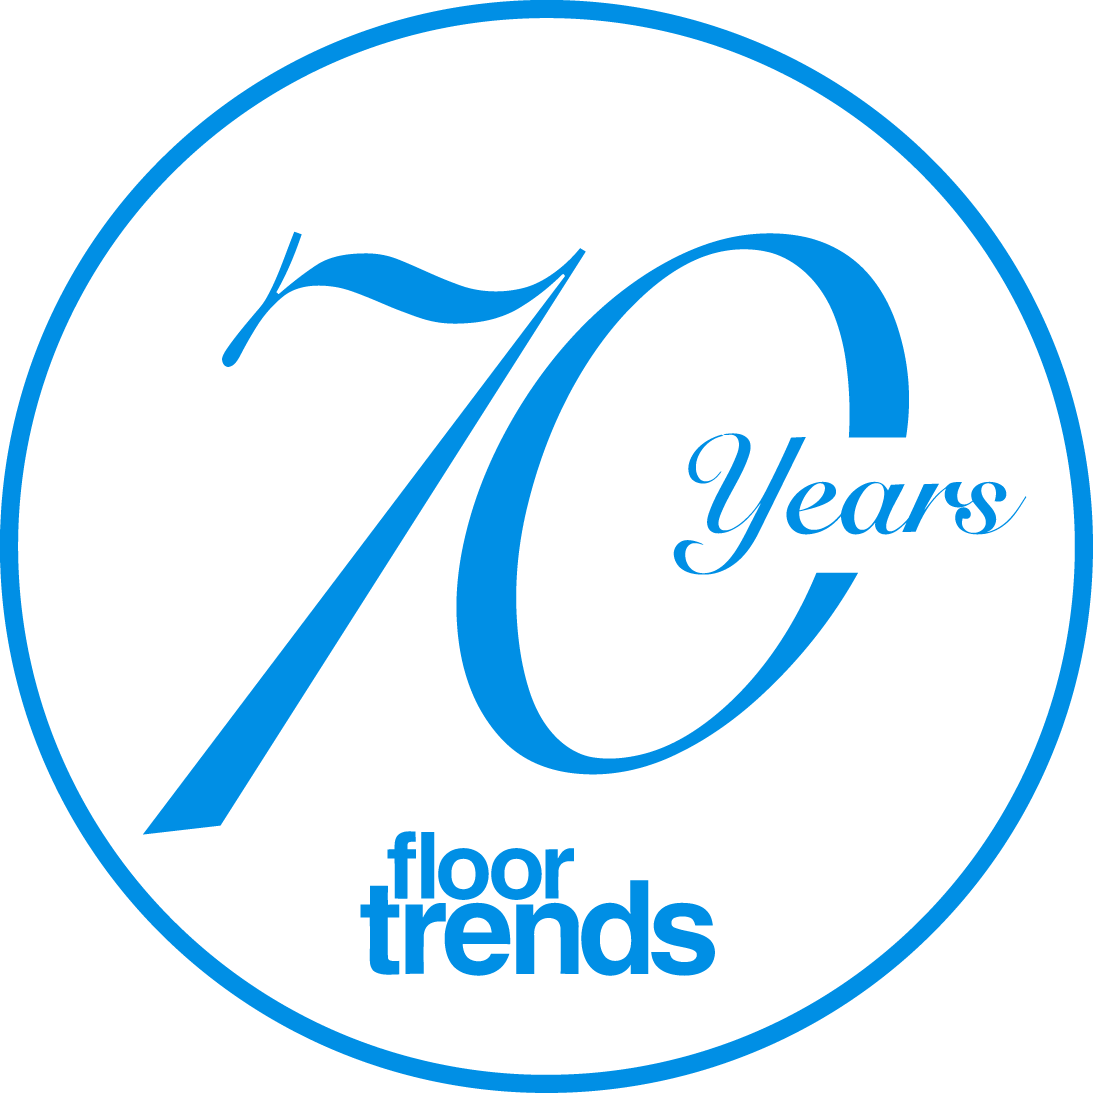 FT 70th anniversary logo cyan